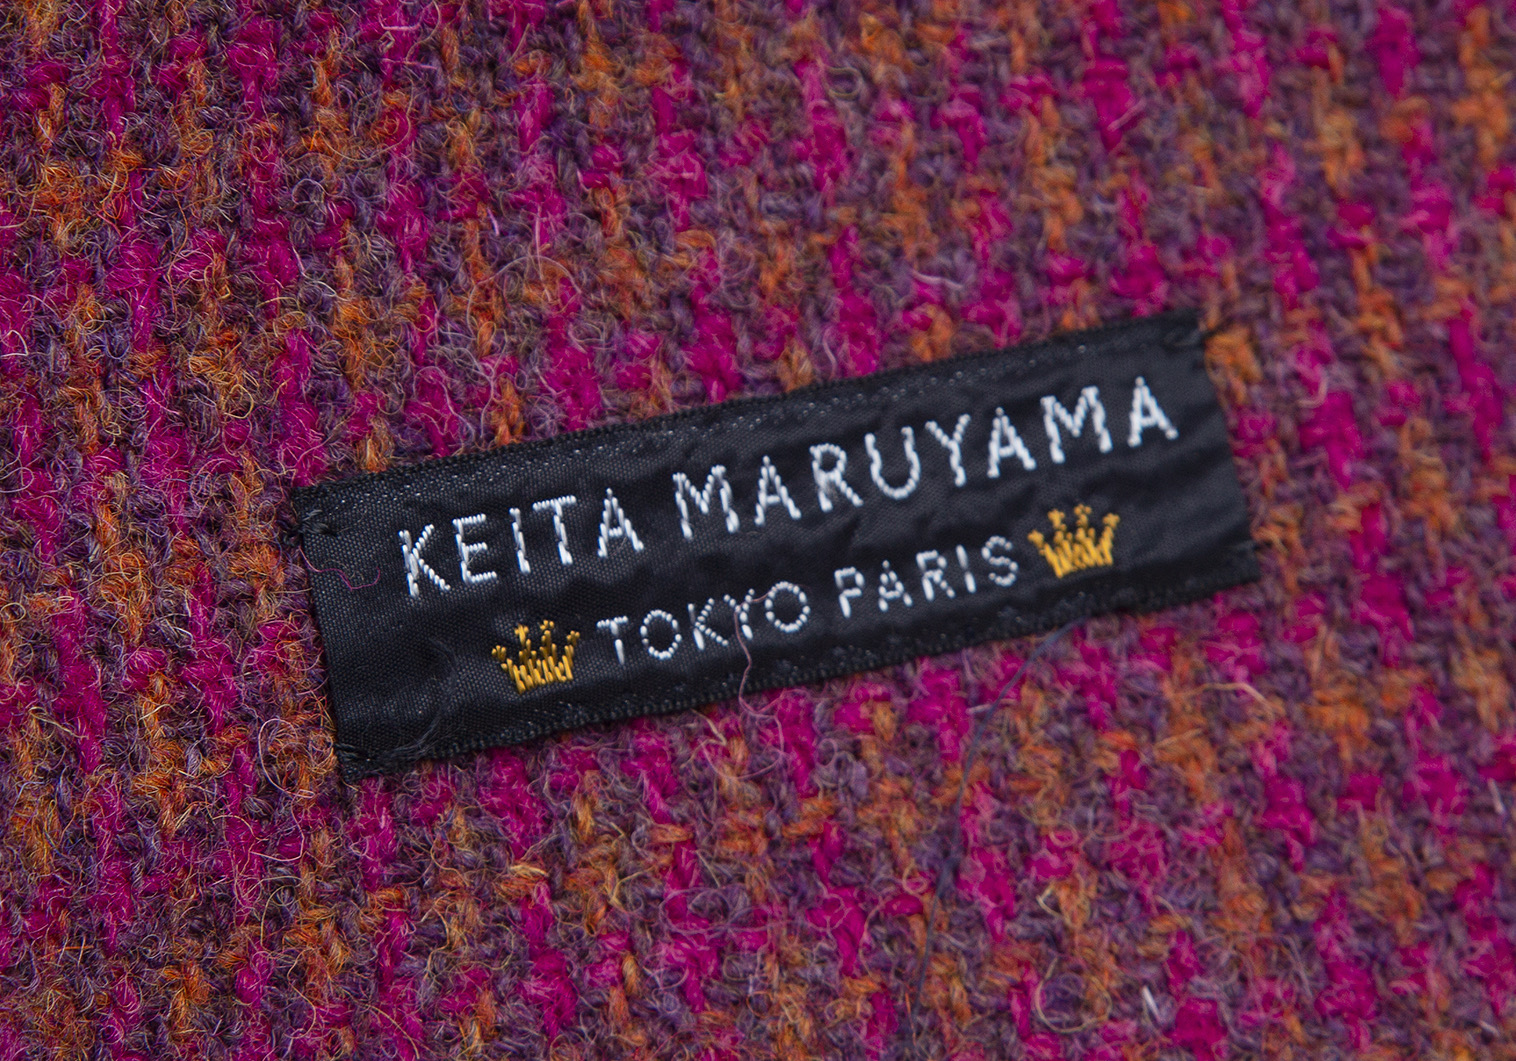 KEITA MARUYAMA / ケイタマルヤマ | シルク プルオーバー チャイナ ブラウス | 1 | パープル | レディース